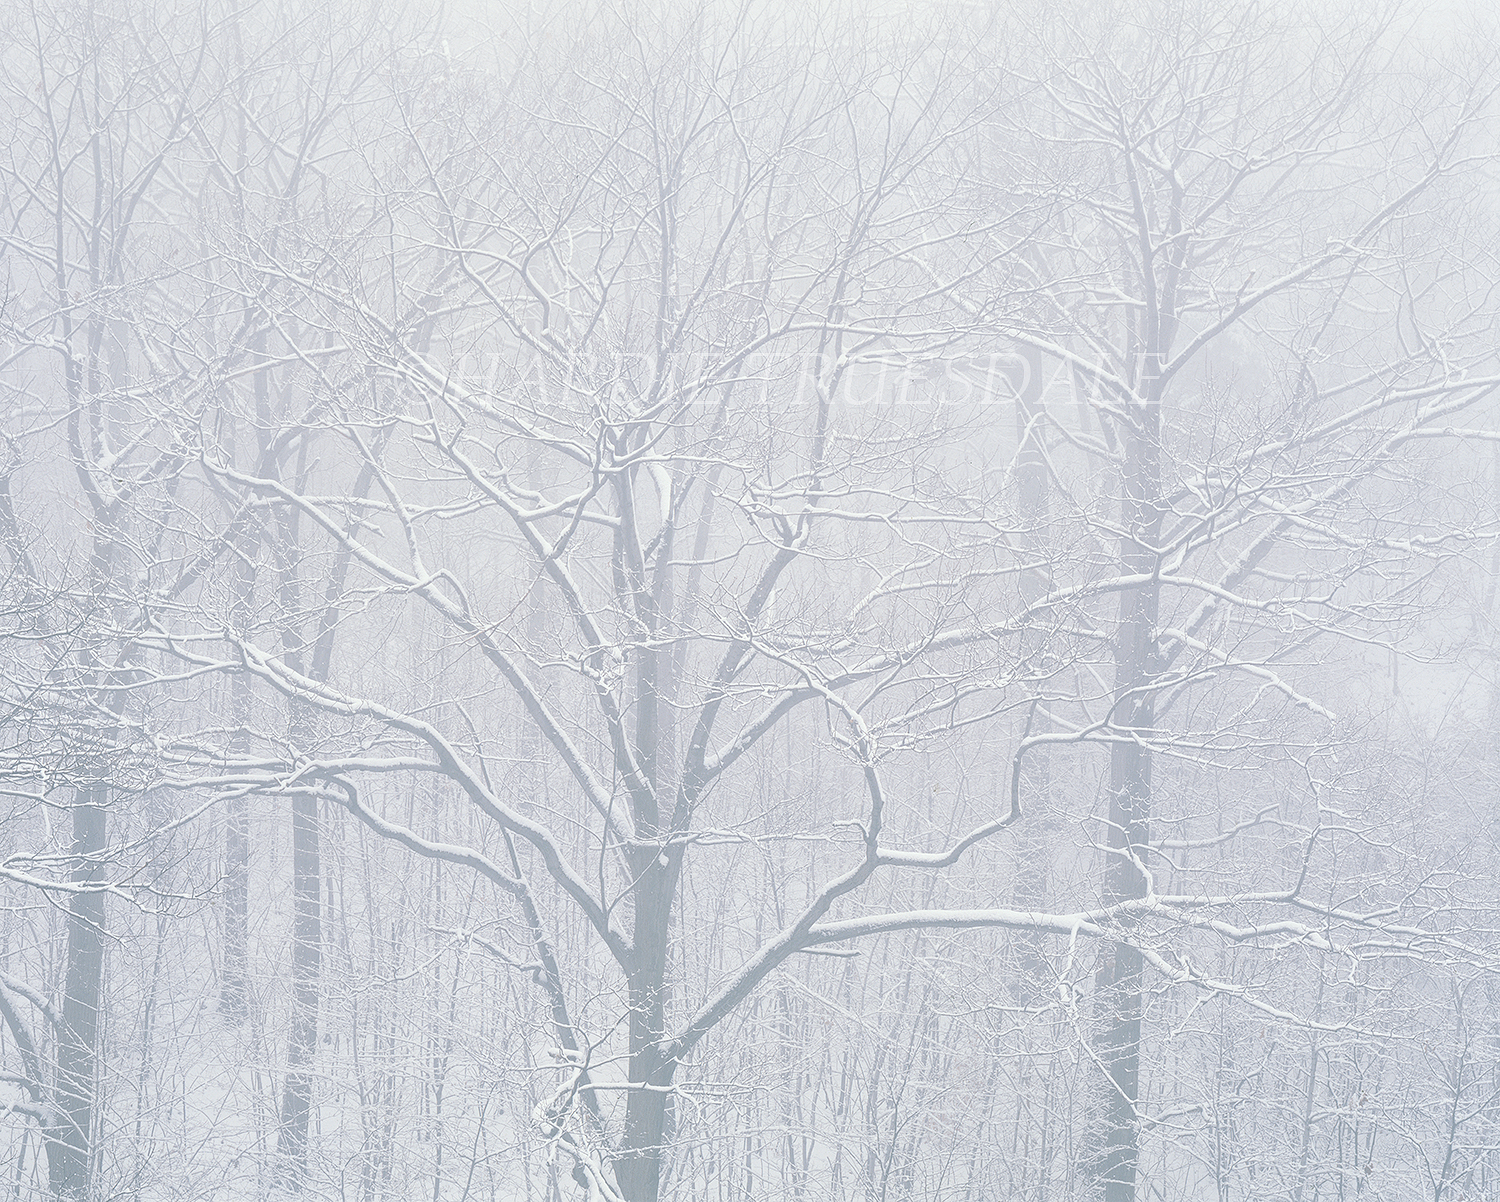  Gks#134 "Bonticou Snowstorm, Mohonk Preserve, NY" 